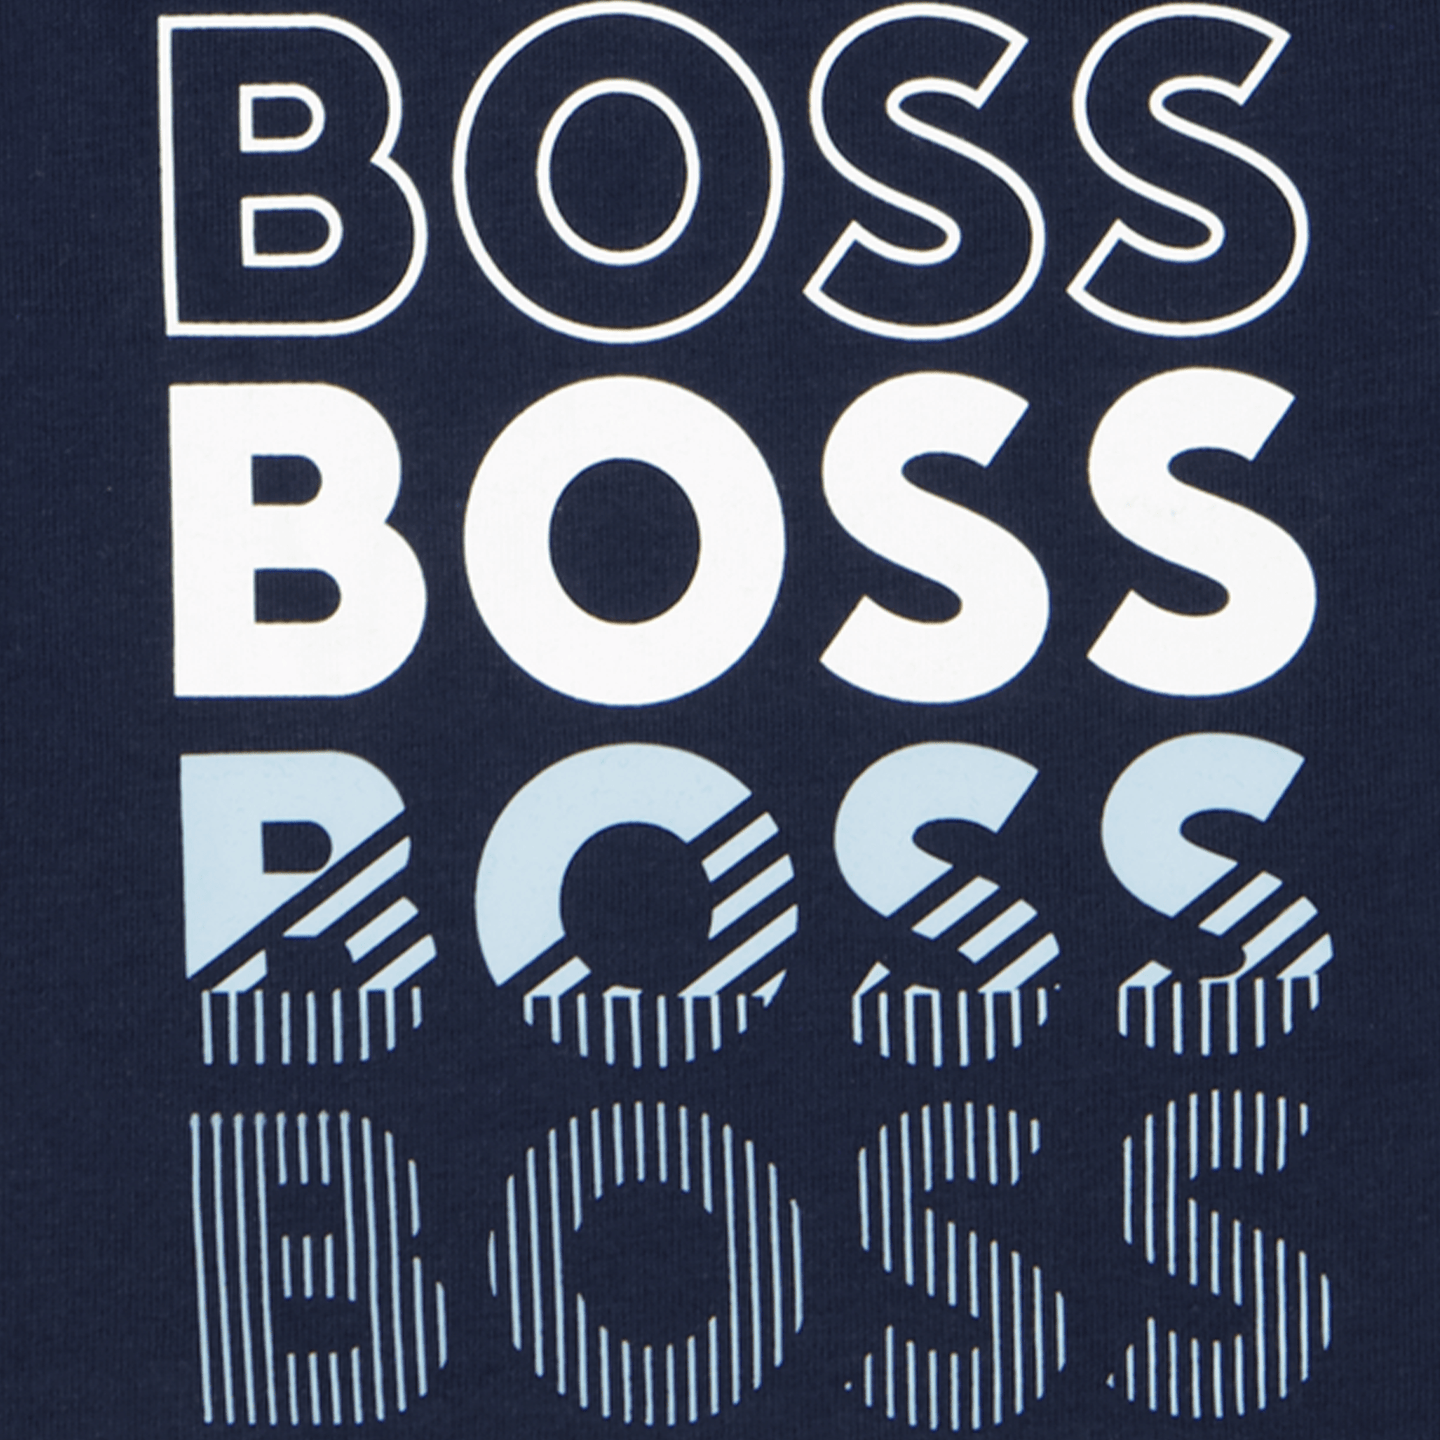 Boss Baby Jongens T-Shirt Navy 6 mnd